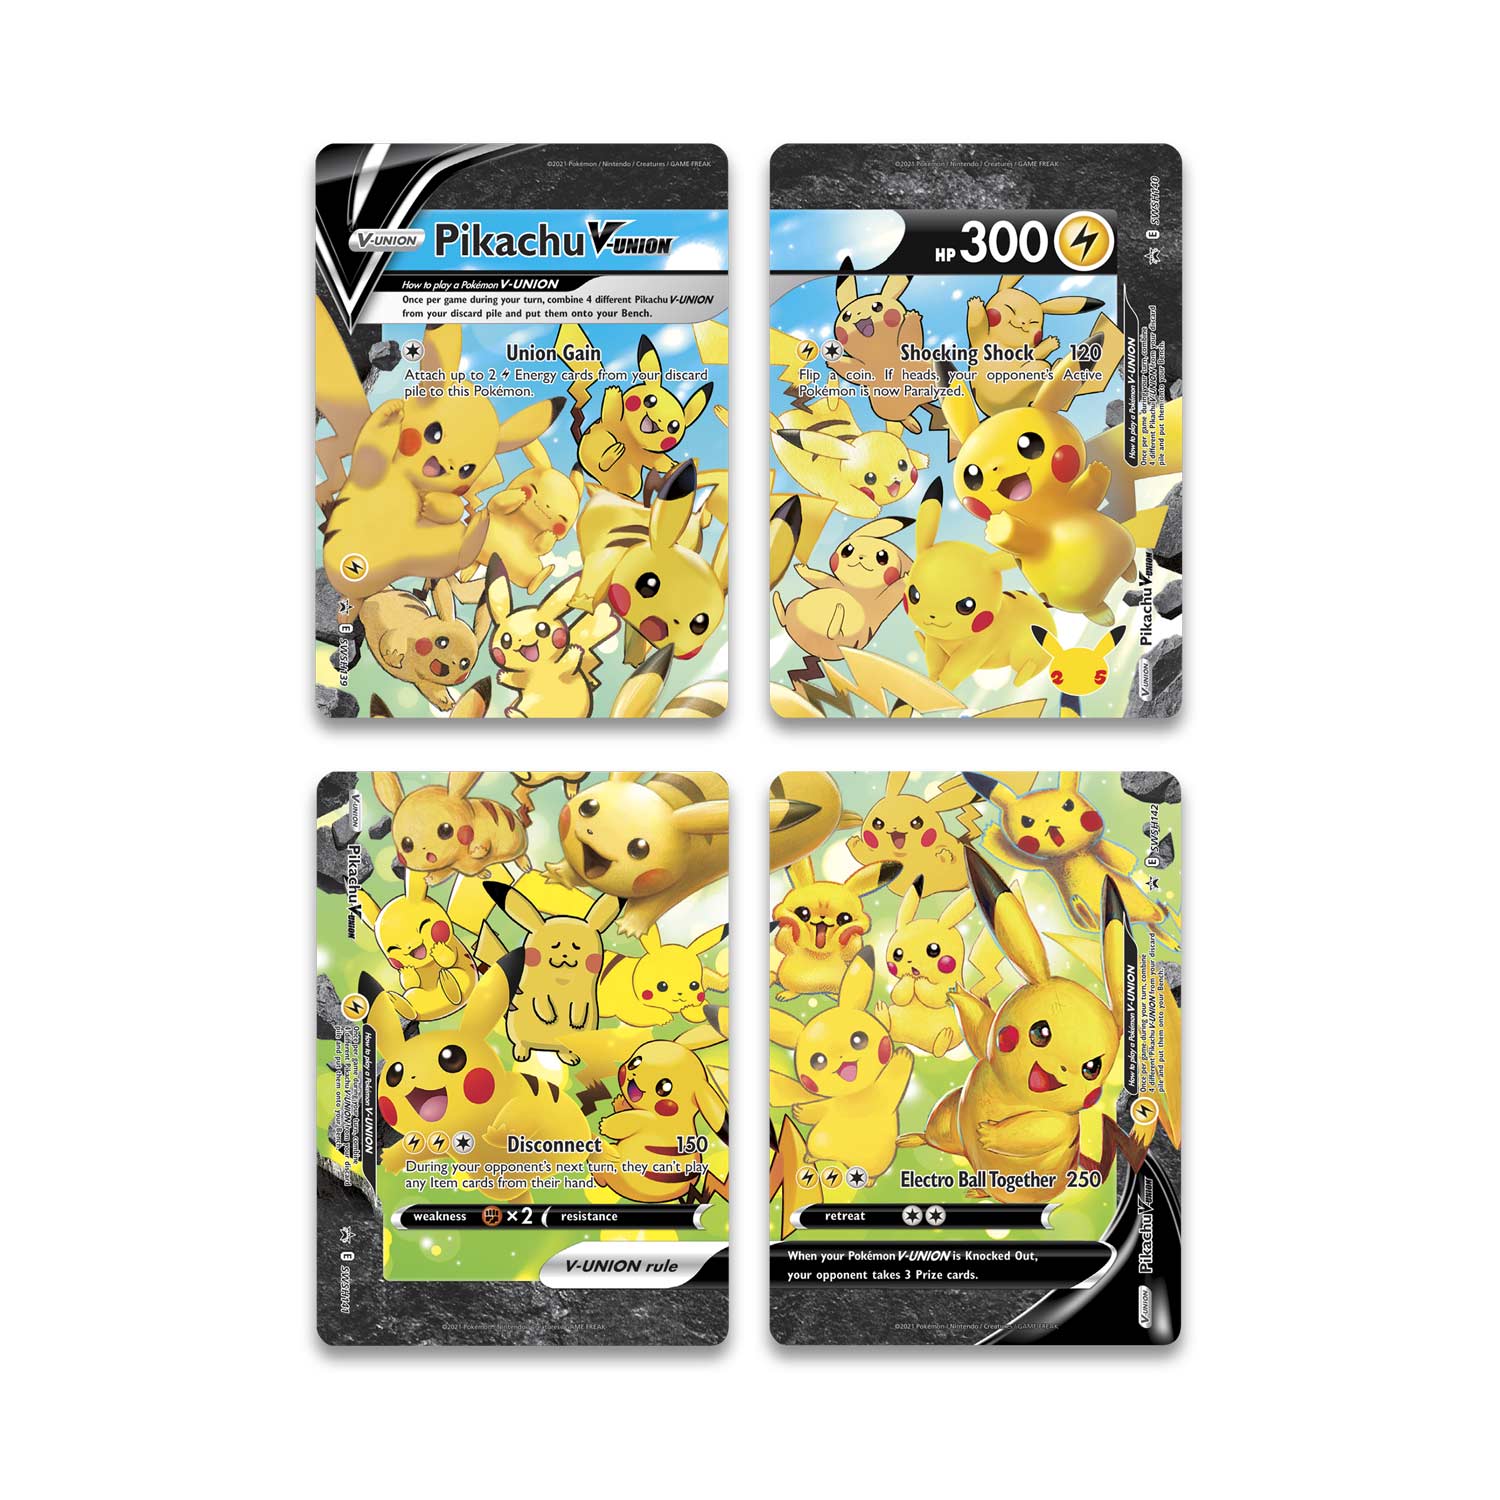 Pikachu V-Union SWSH JUMBO CARD Pokemon Celebrations 25th Anniversary